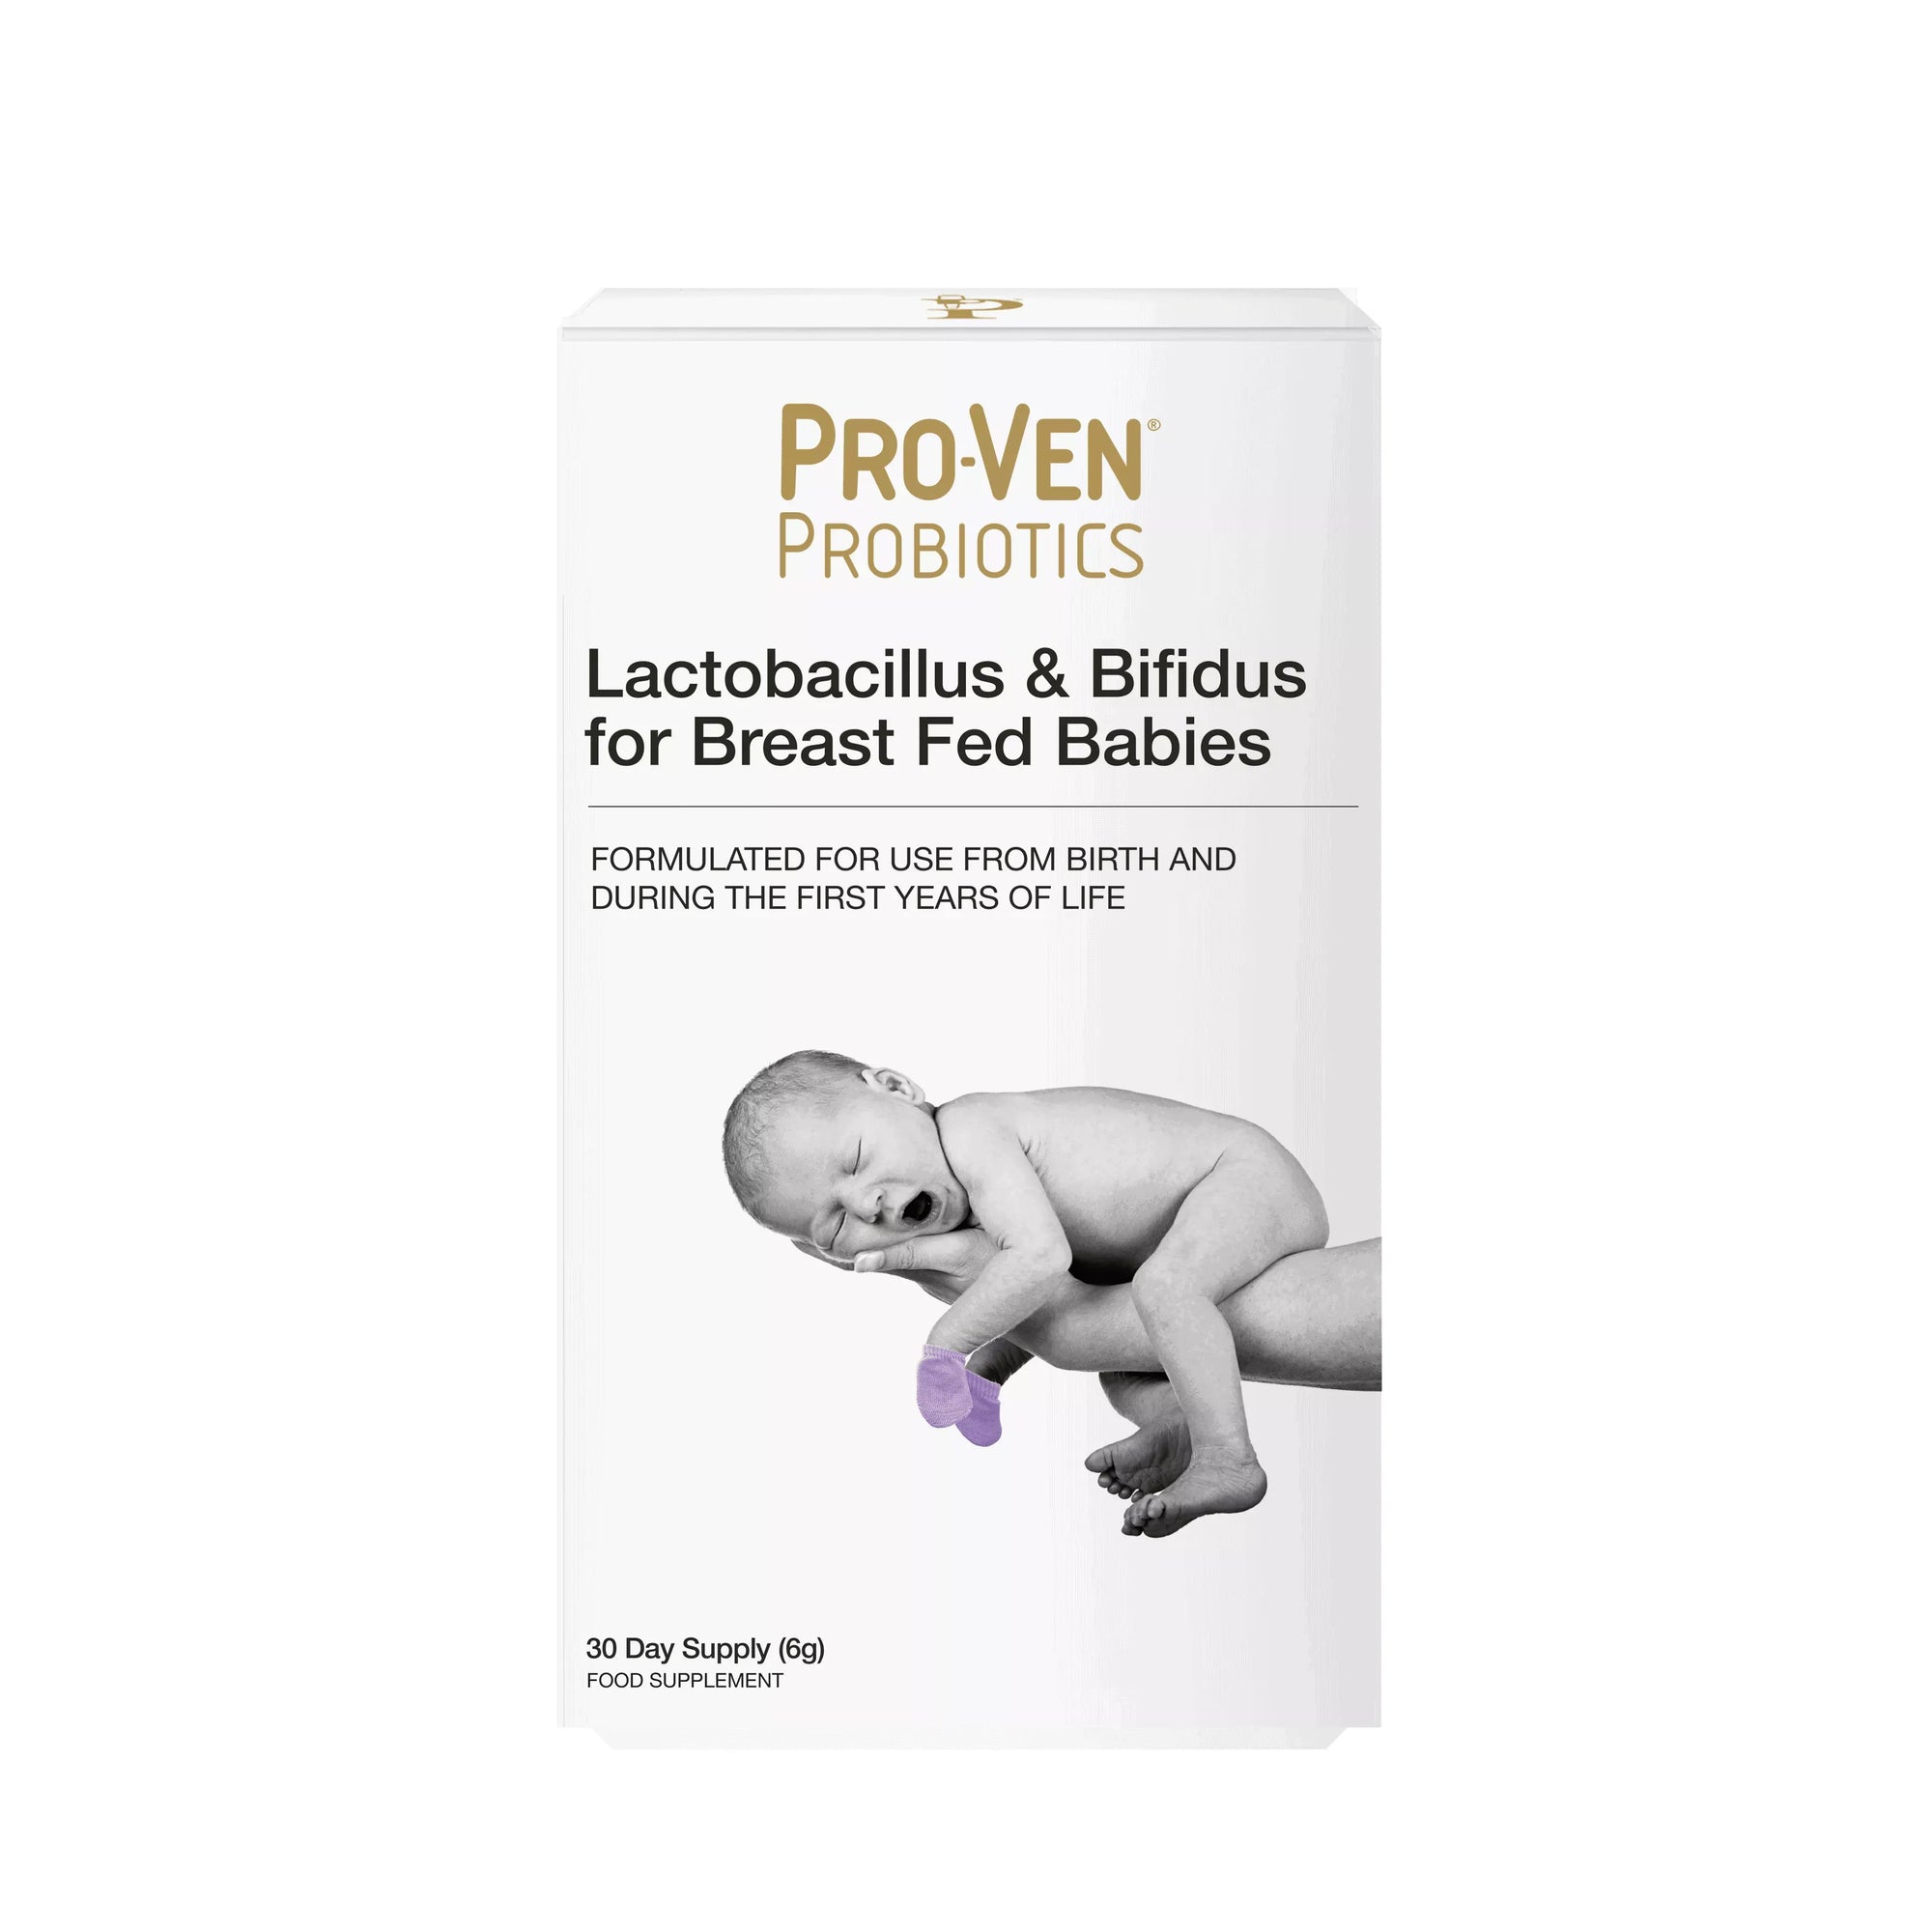 ProVen Probiotics Lactobacillus & Bifidus for Breast Fed Babies